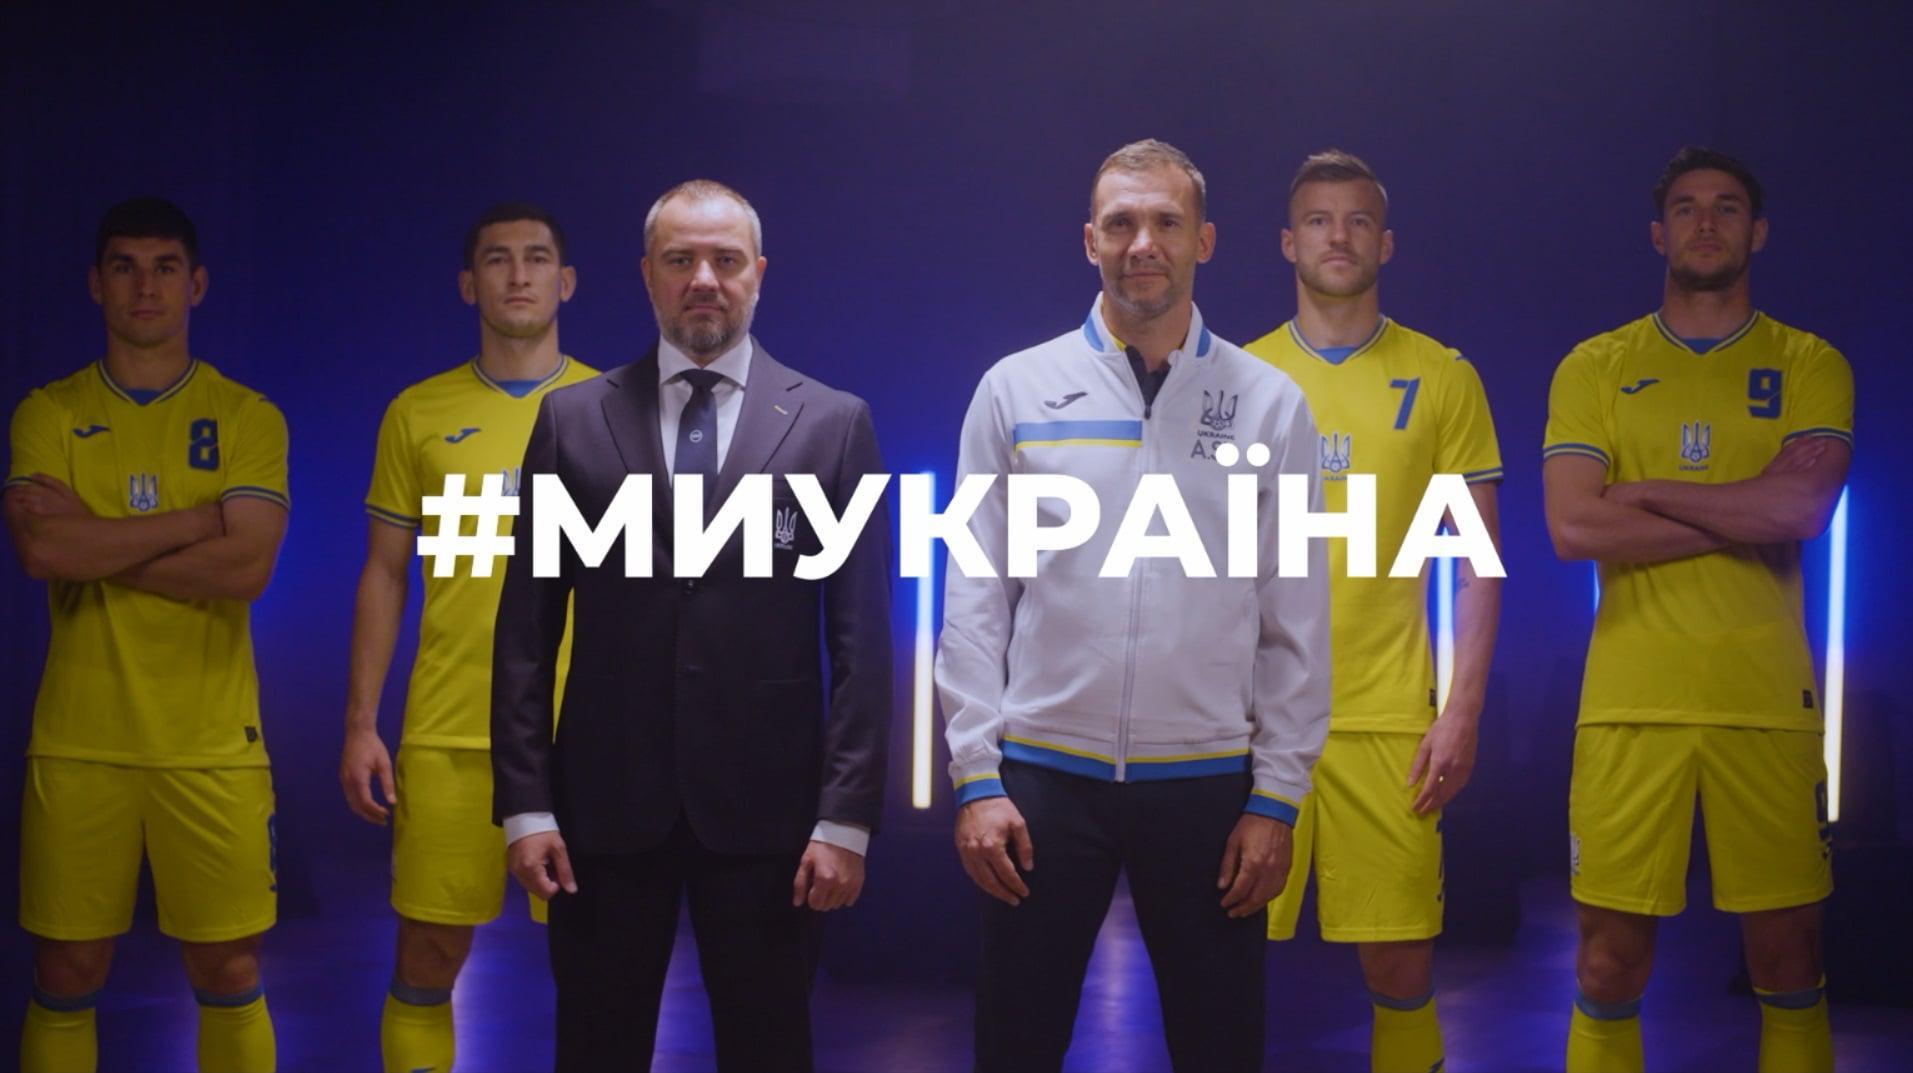 Euro 2020: Χαμός με την εμφάνιση της Εθνικής Ουκρανίας - Αναγράφεται σύνθημα συνεργατών των Ναζί στη φανέλα